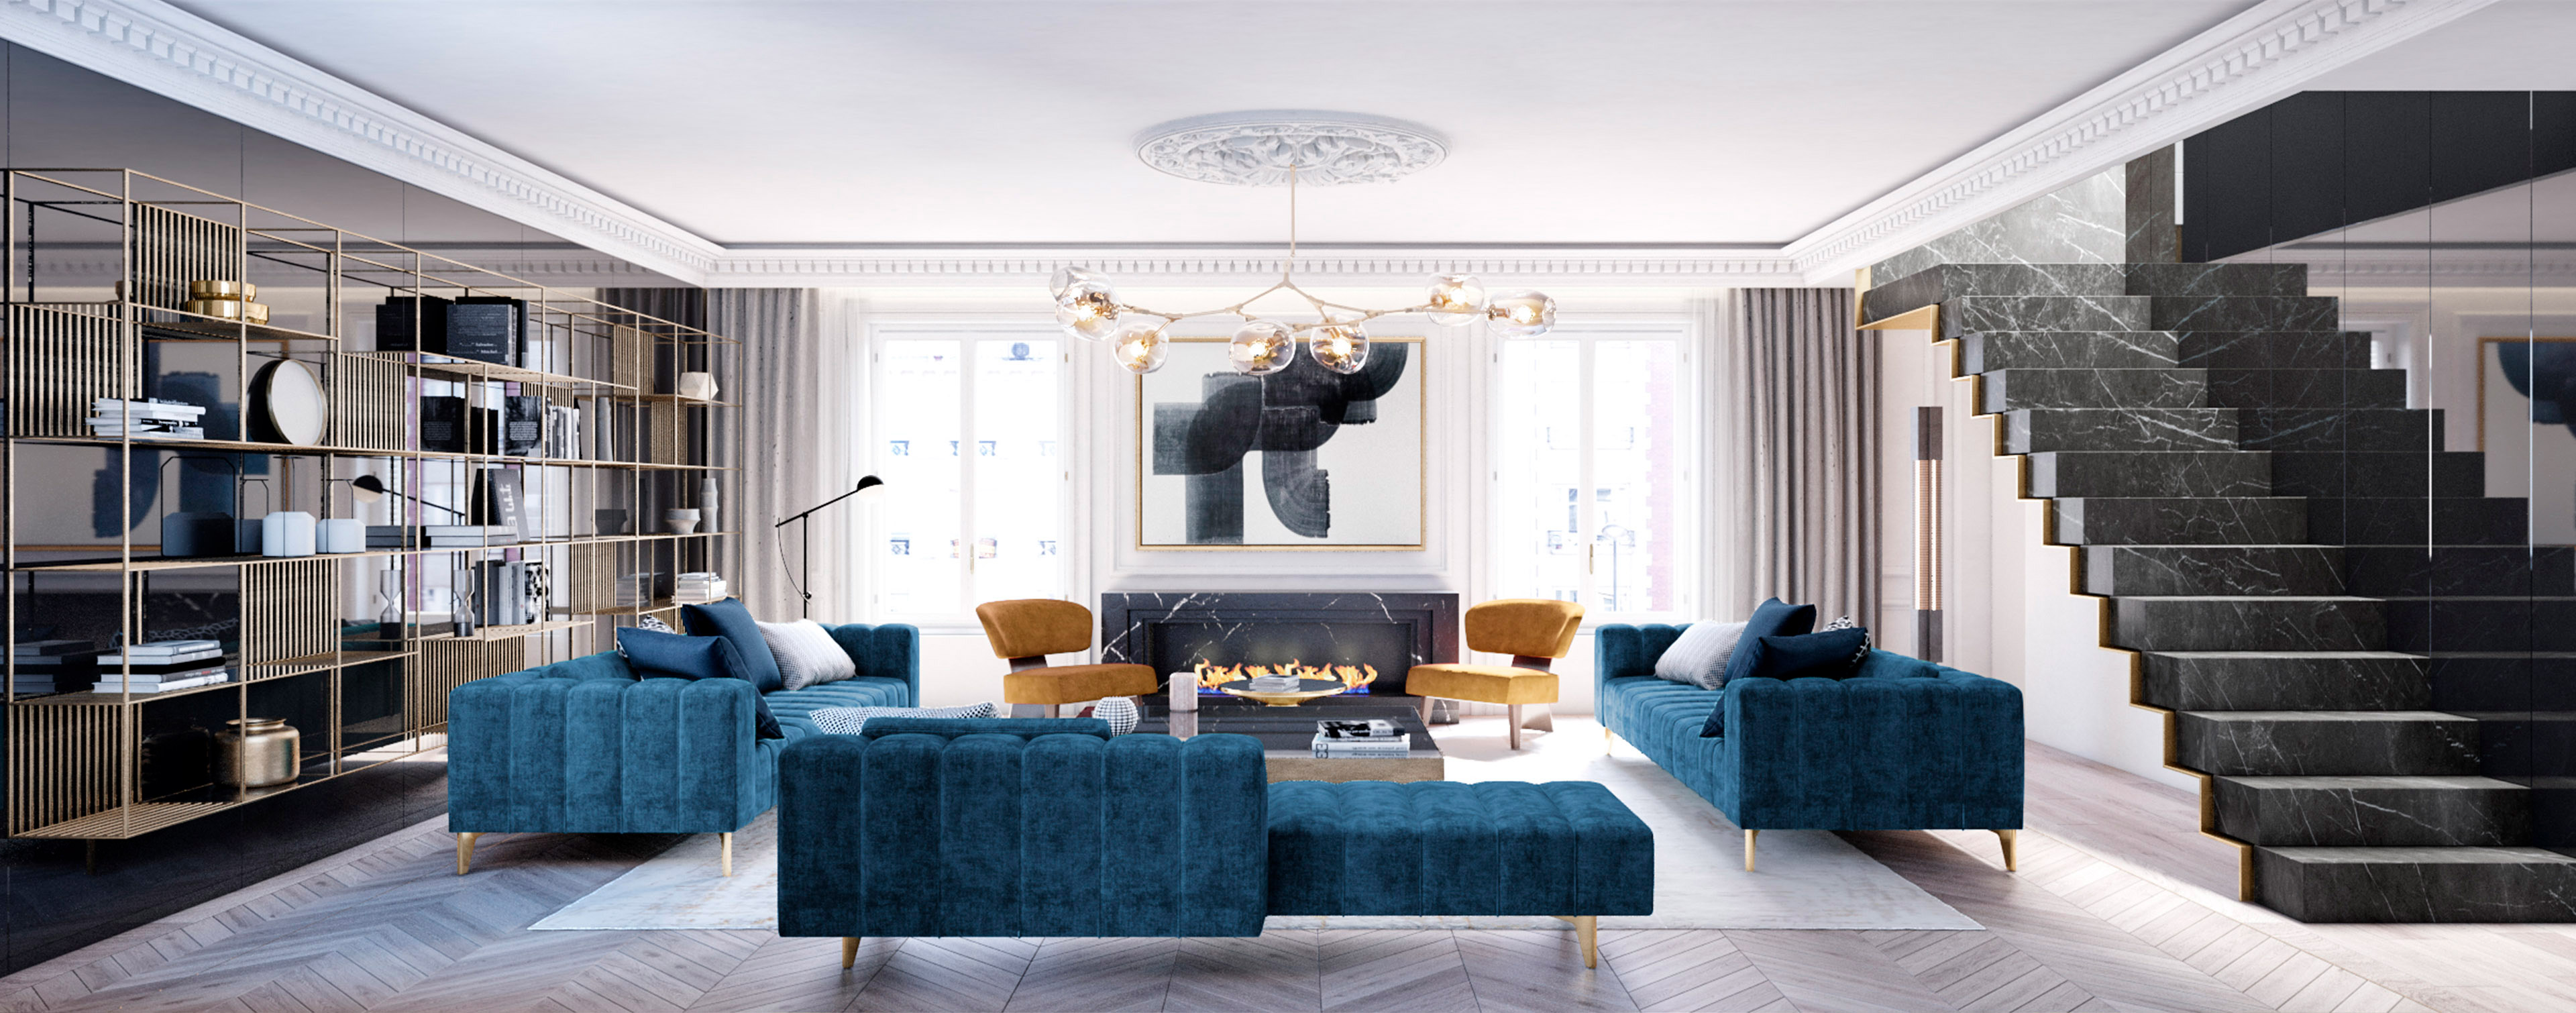 luv studio luxury architects paris saint germain penthouse apartment IMG 01 1 - LUV Studio - Architecture et design - Barcelone